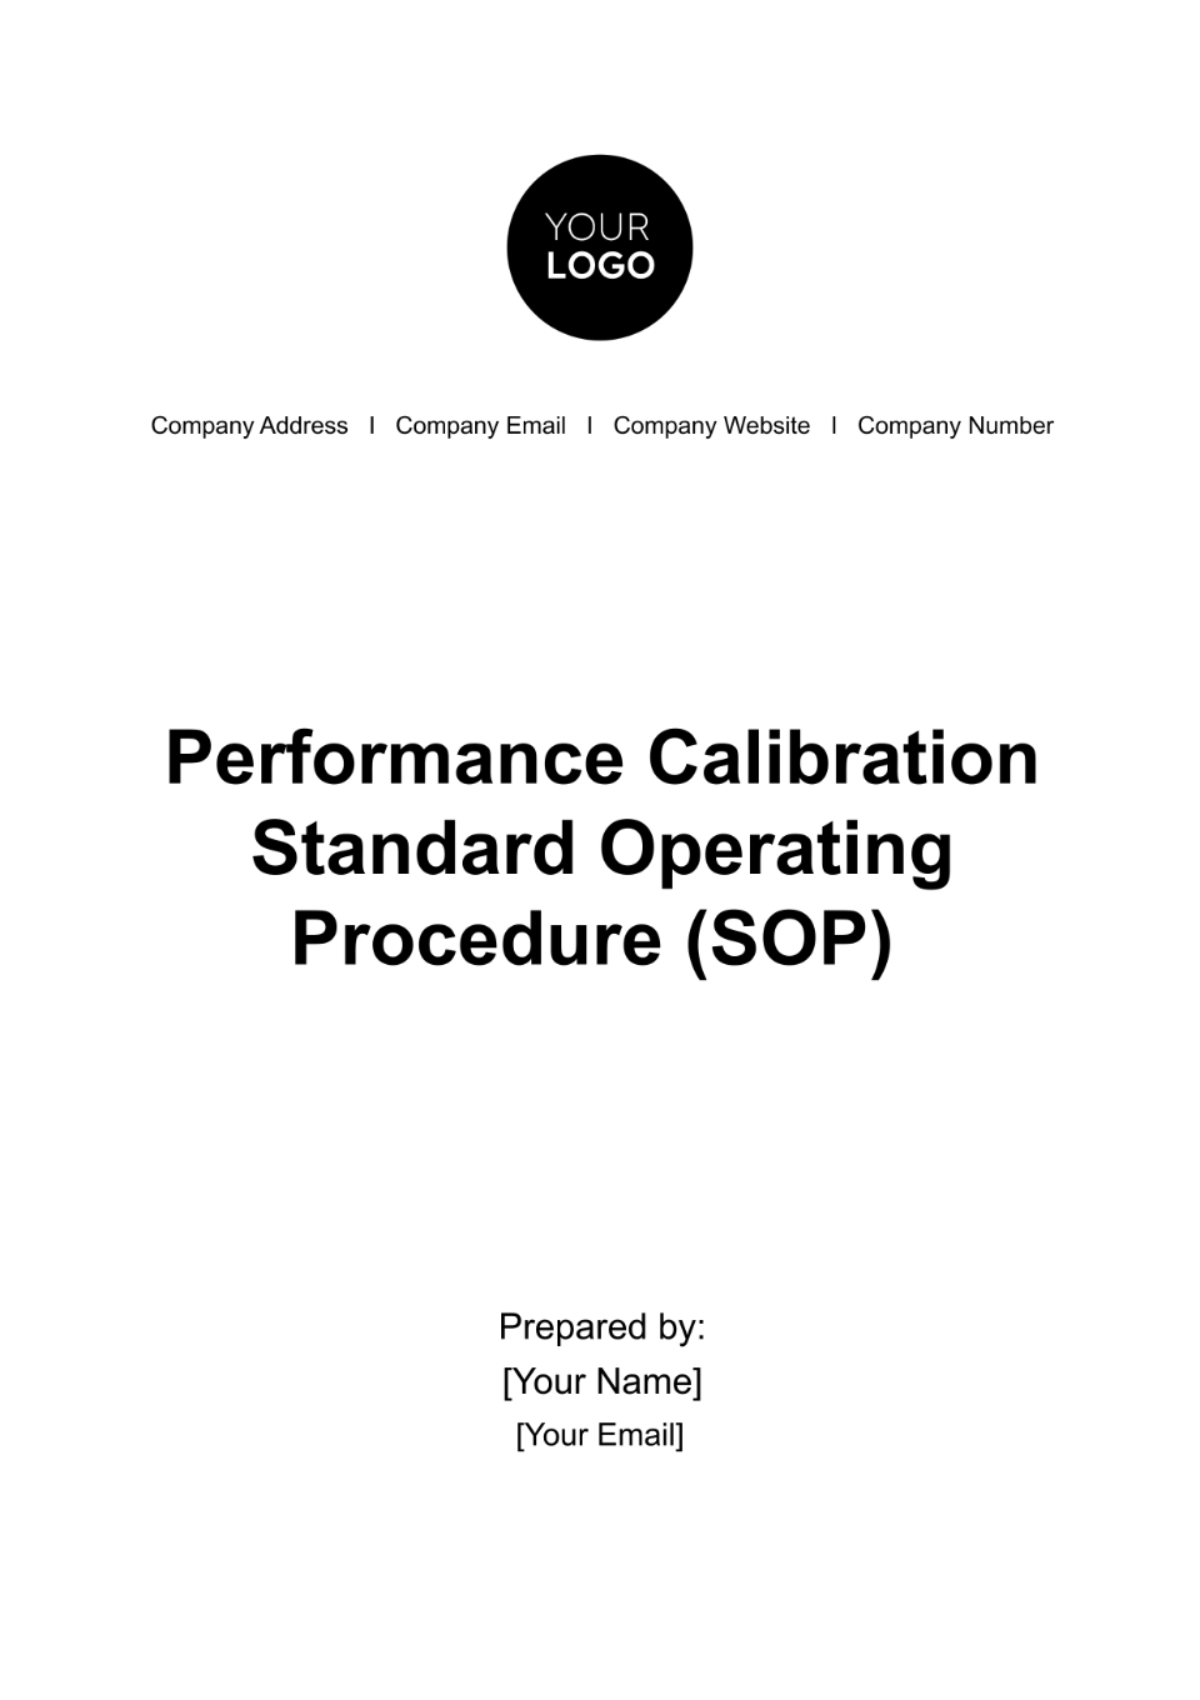 Performance Calibration Standard Operating Procedure (SOP) HR Template